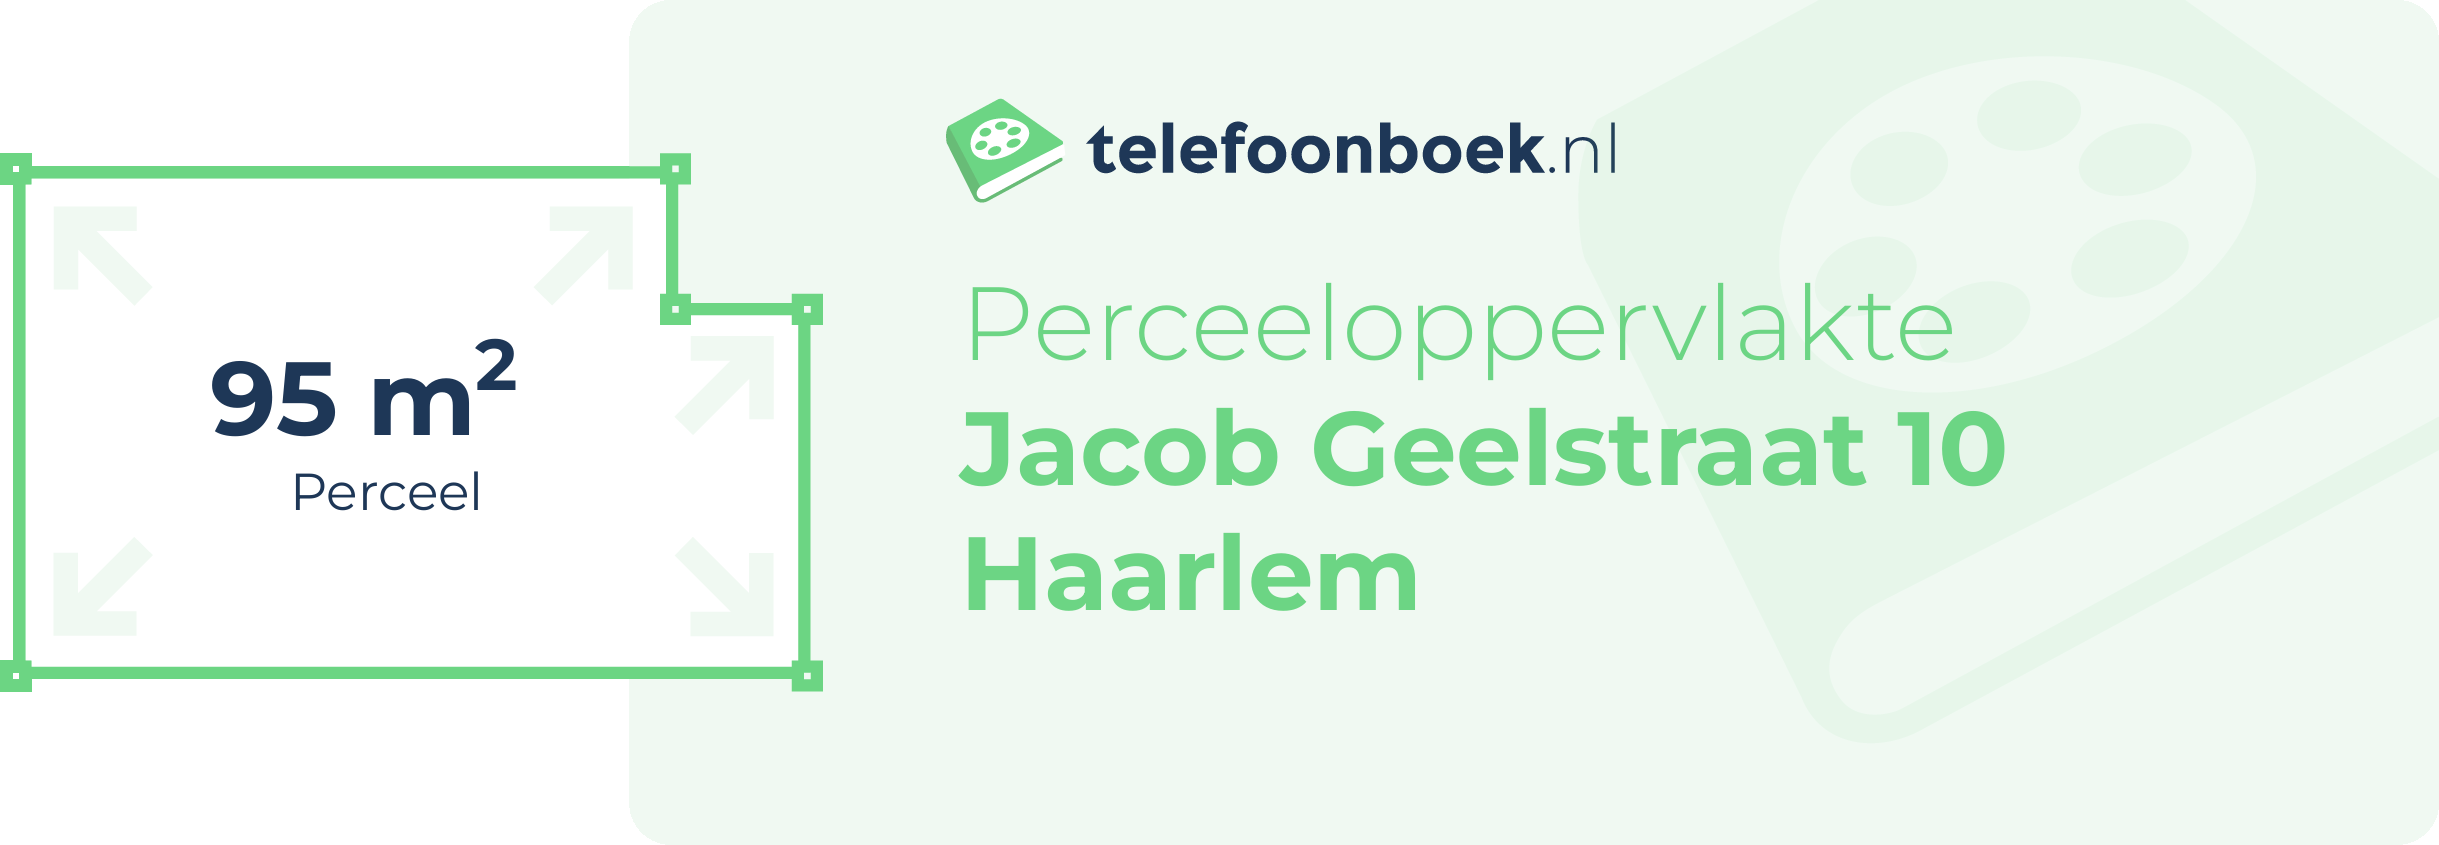 Perceeloppervlakte Jacob Geelstraat 10 Haarlem